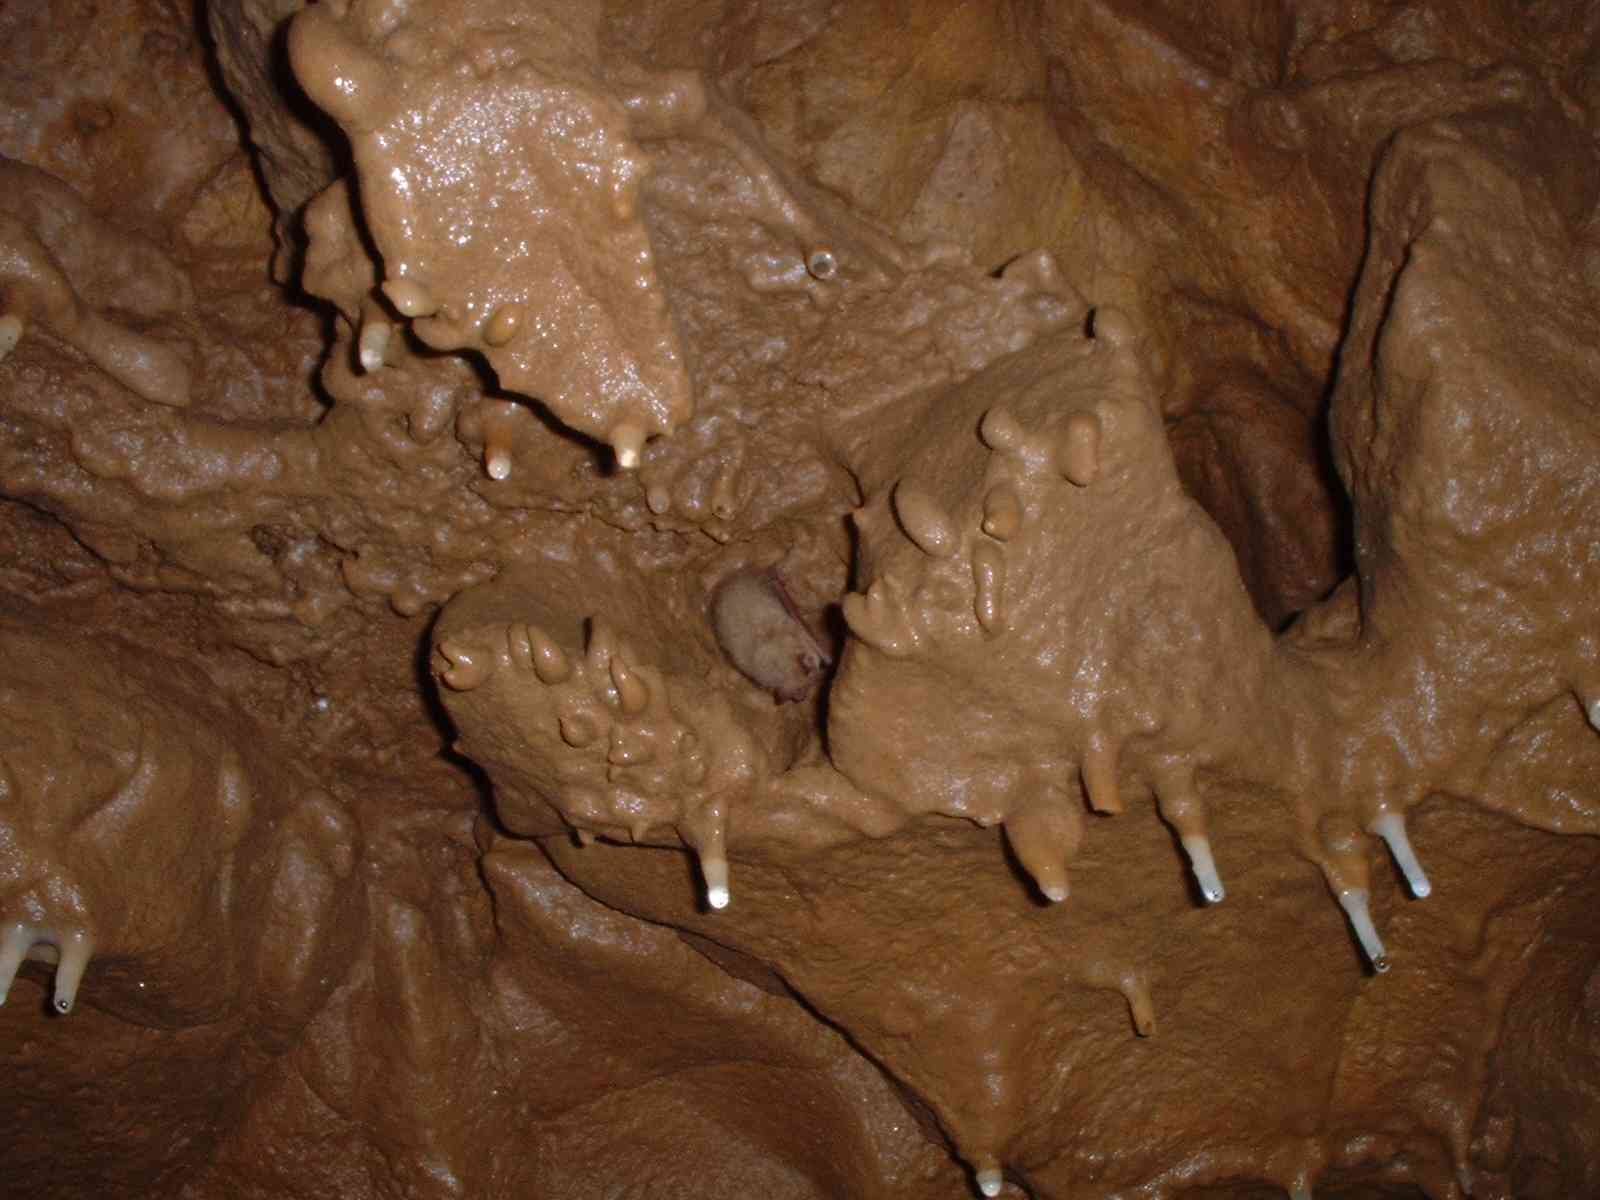 Bat among angled stalactites